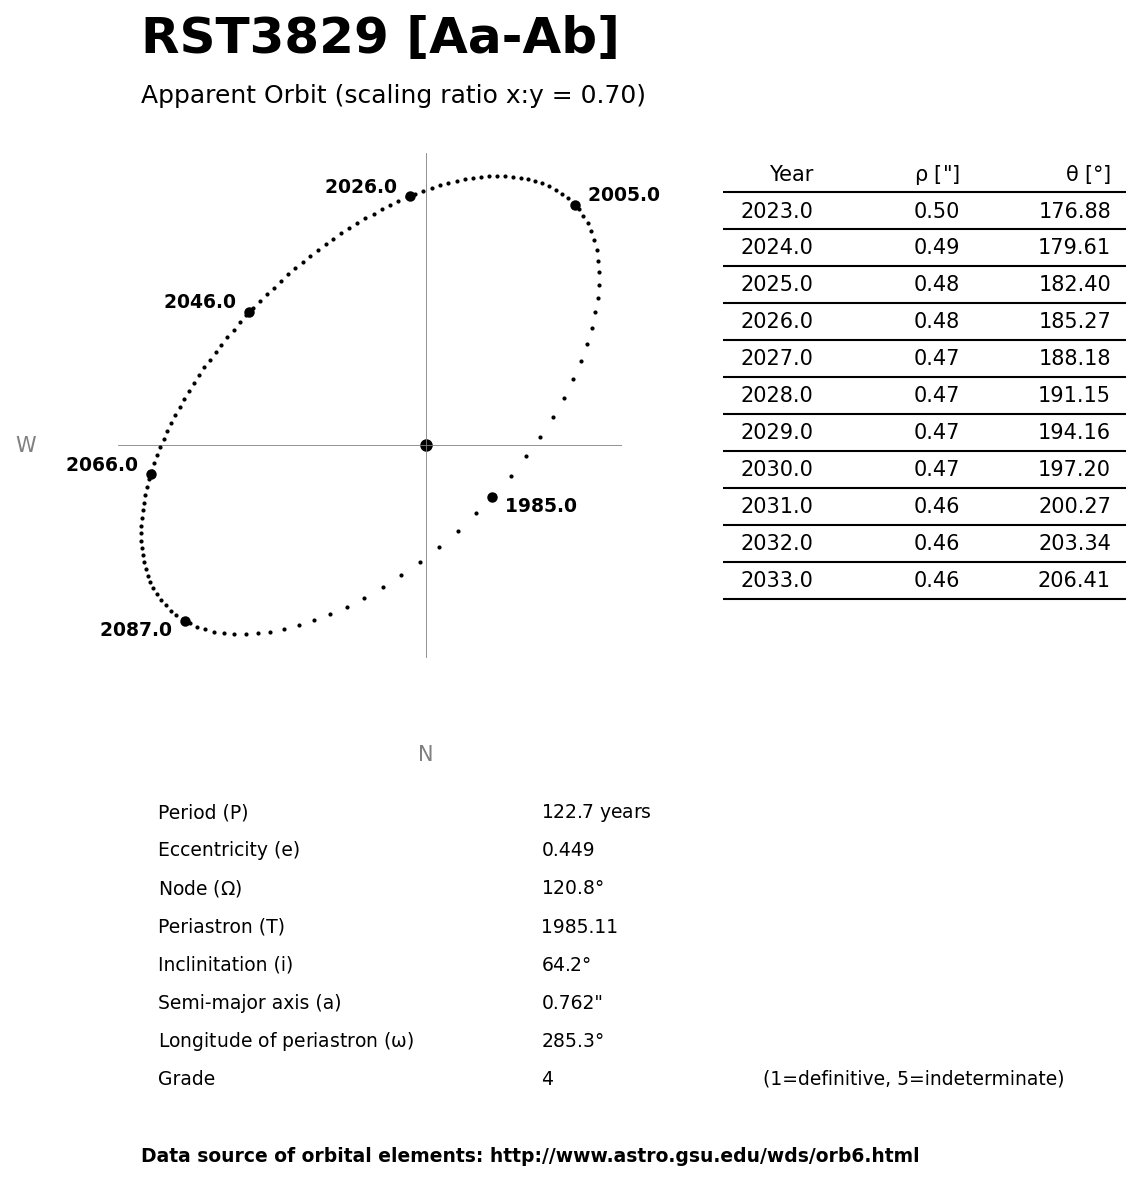 ../images/binary-star-orbits/RST3829-Aa-Ab-orbit.jpg